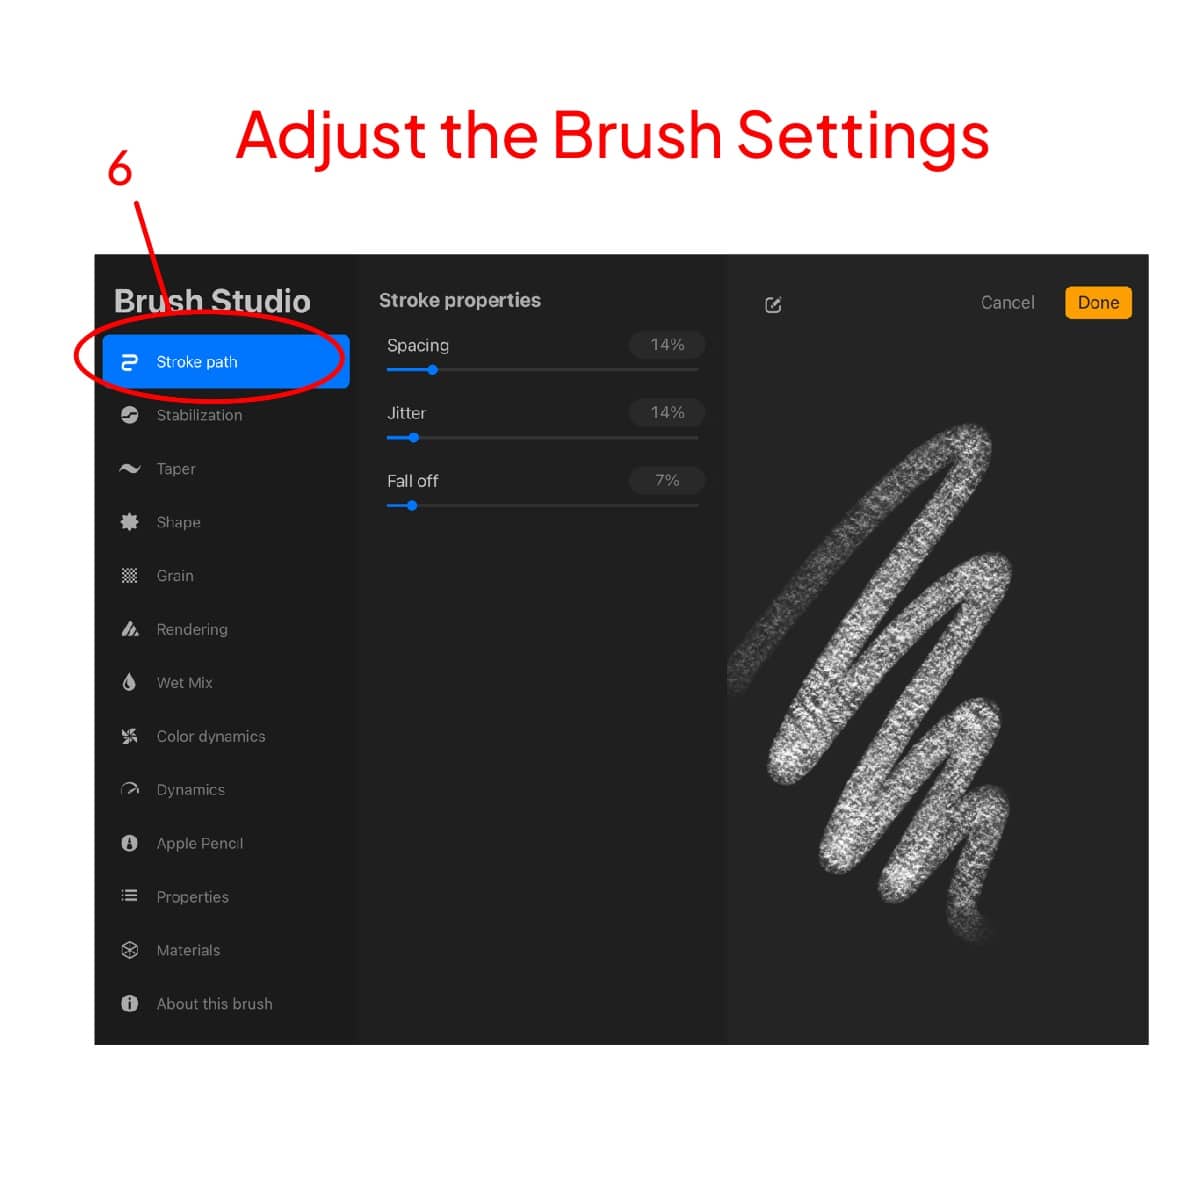 Adjusting the brush settings